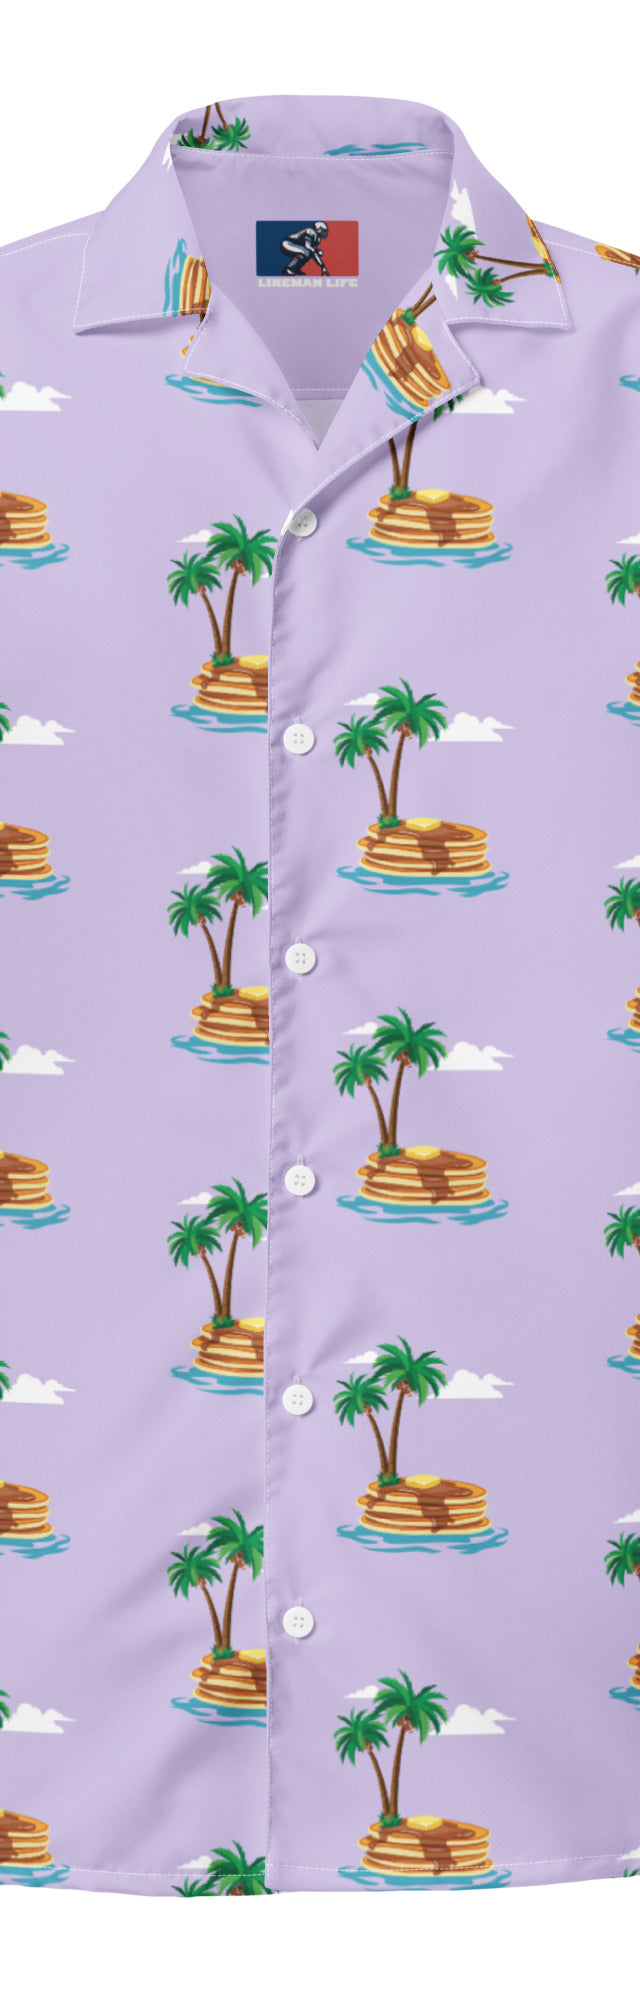 Pancakes and Palm Trees - Purple